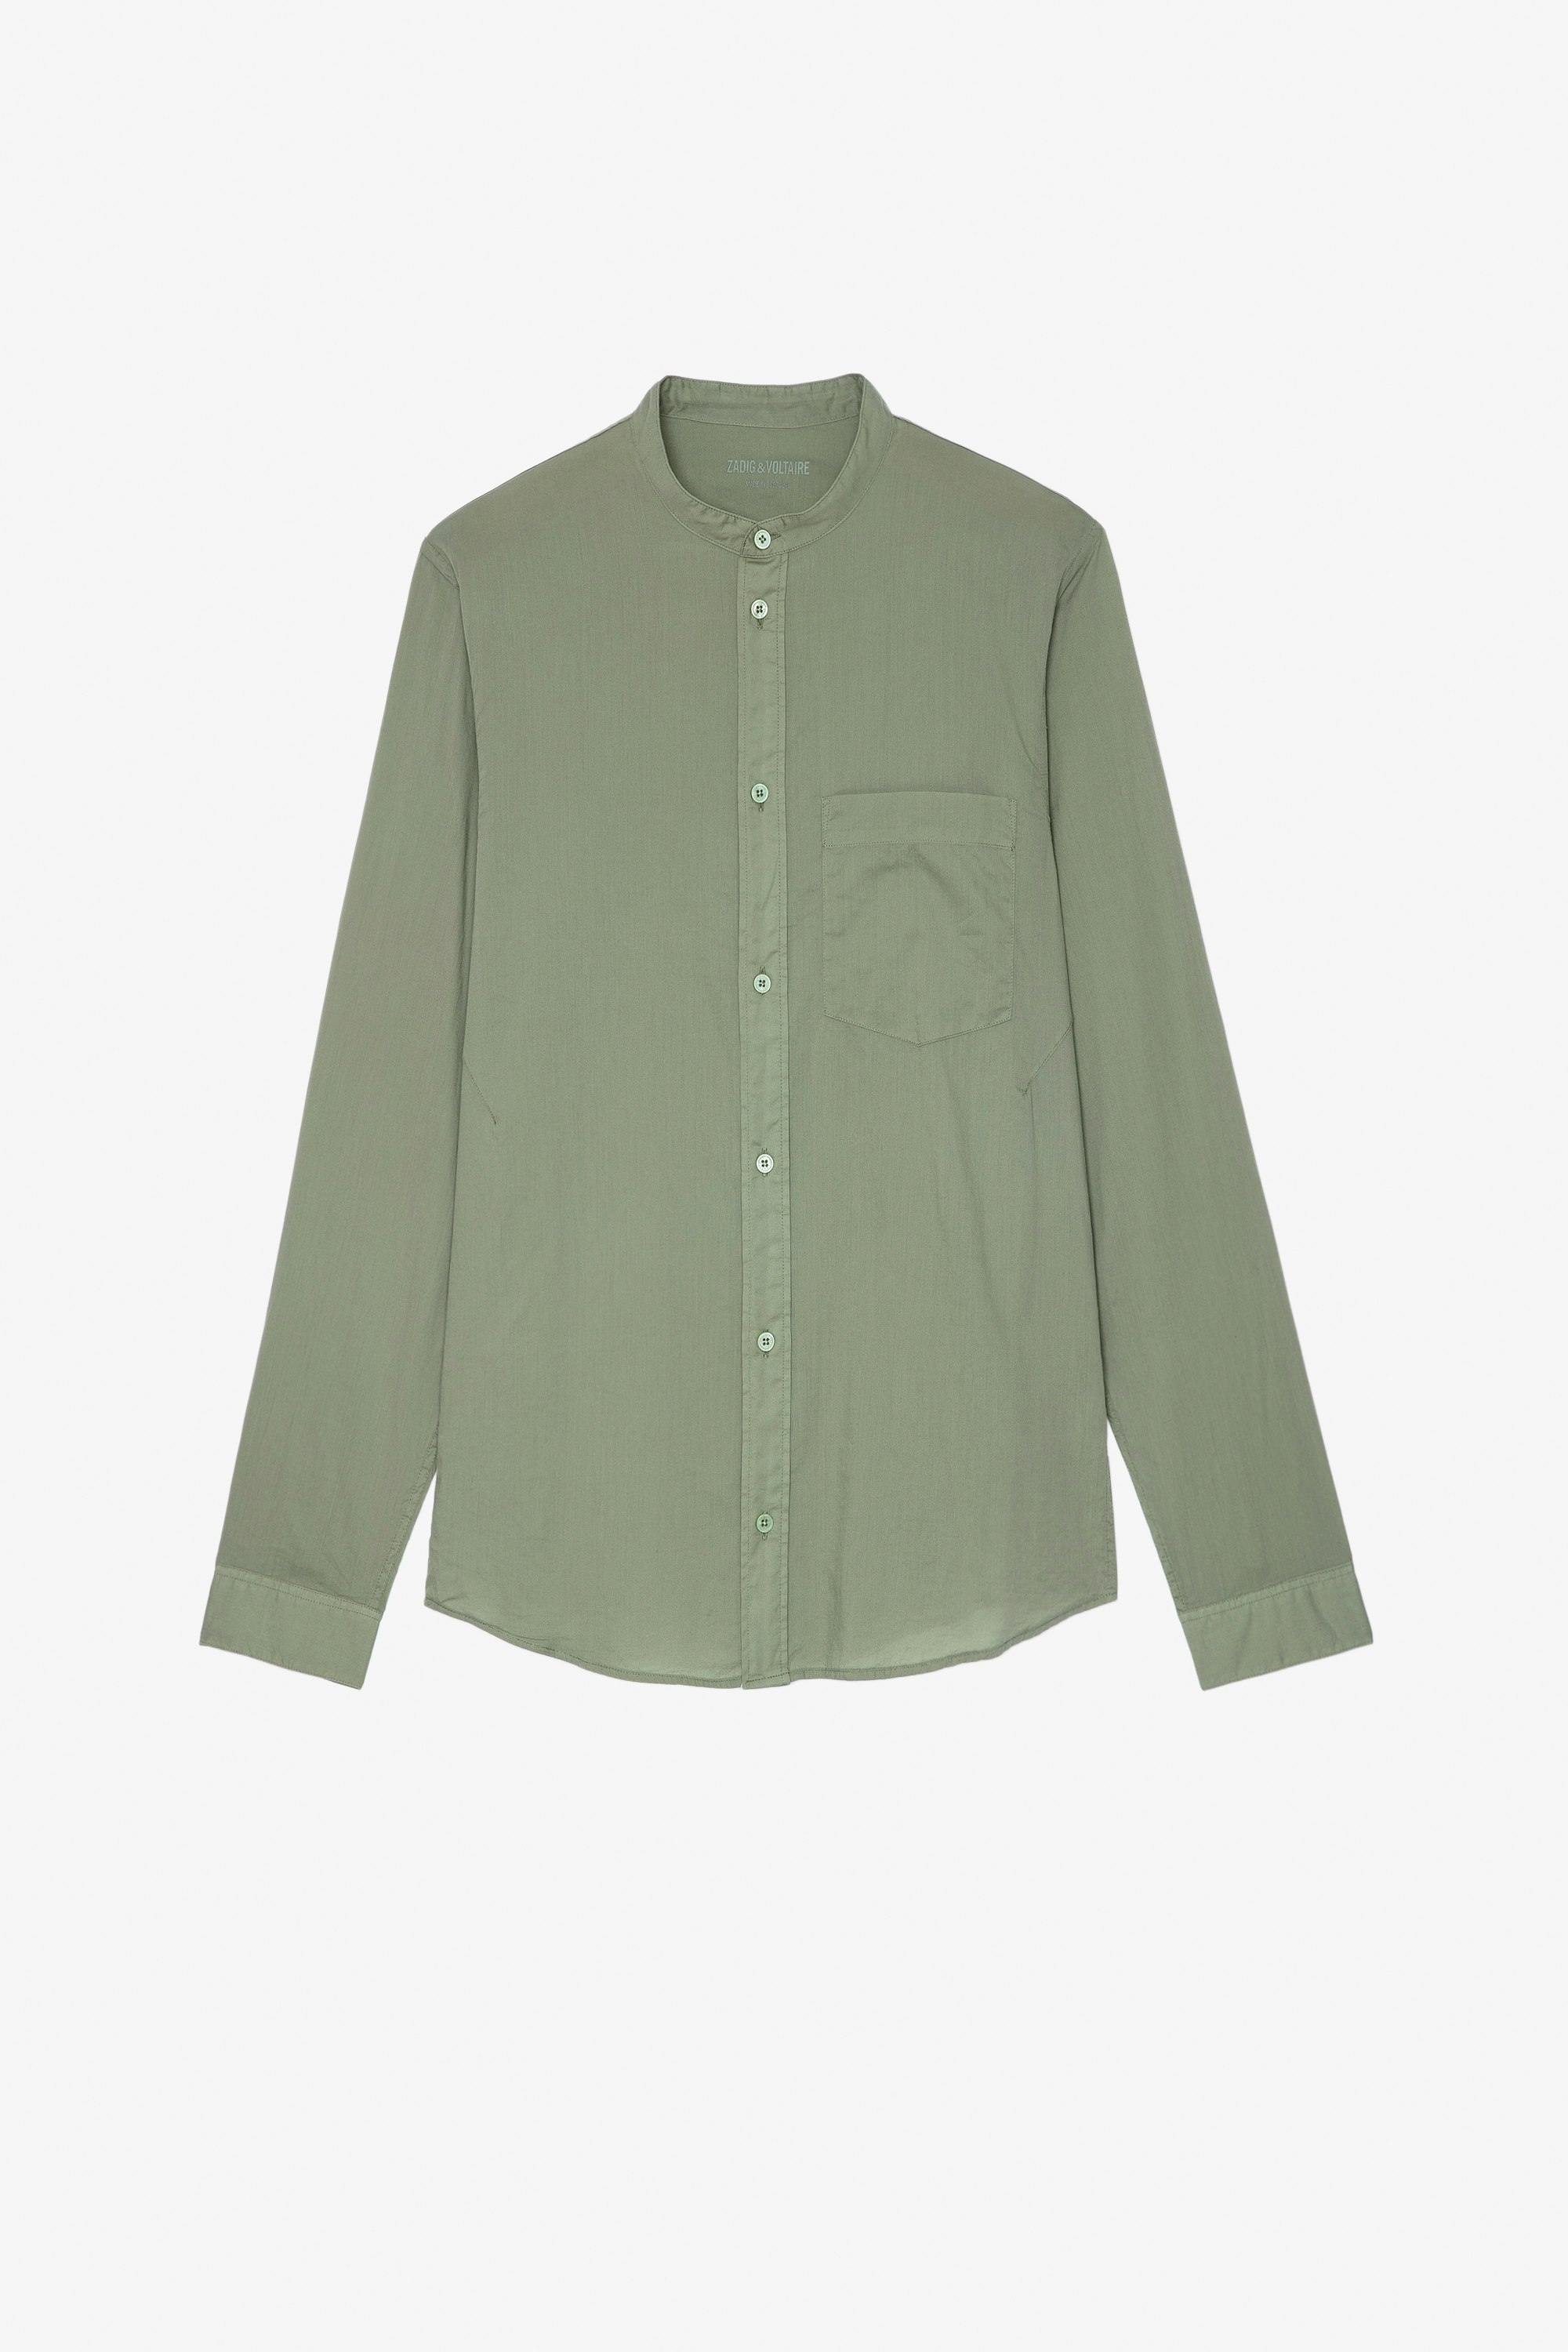 Thibaut Shirt Men's button-up military shirt in green cotton